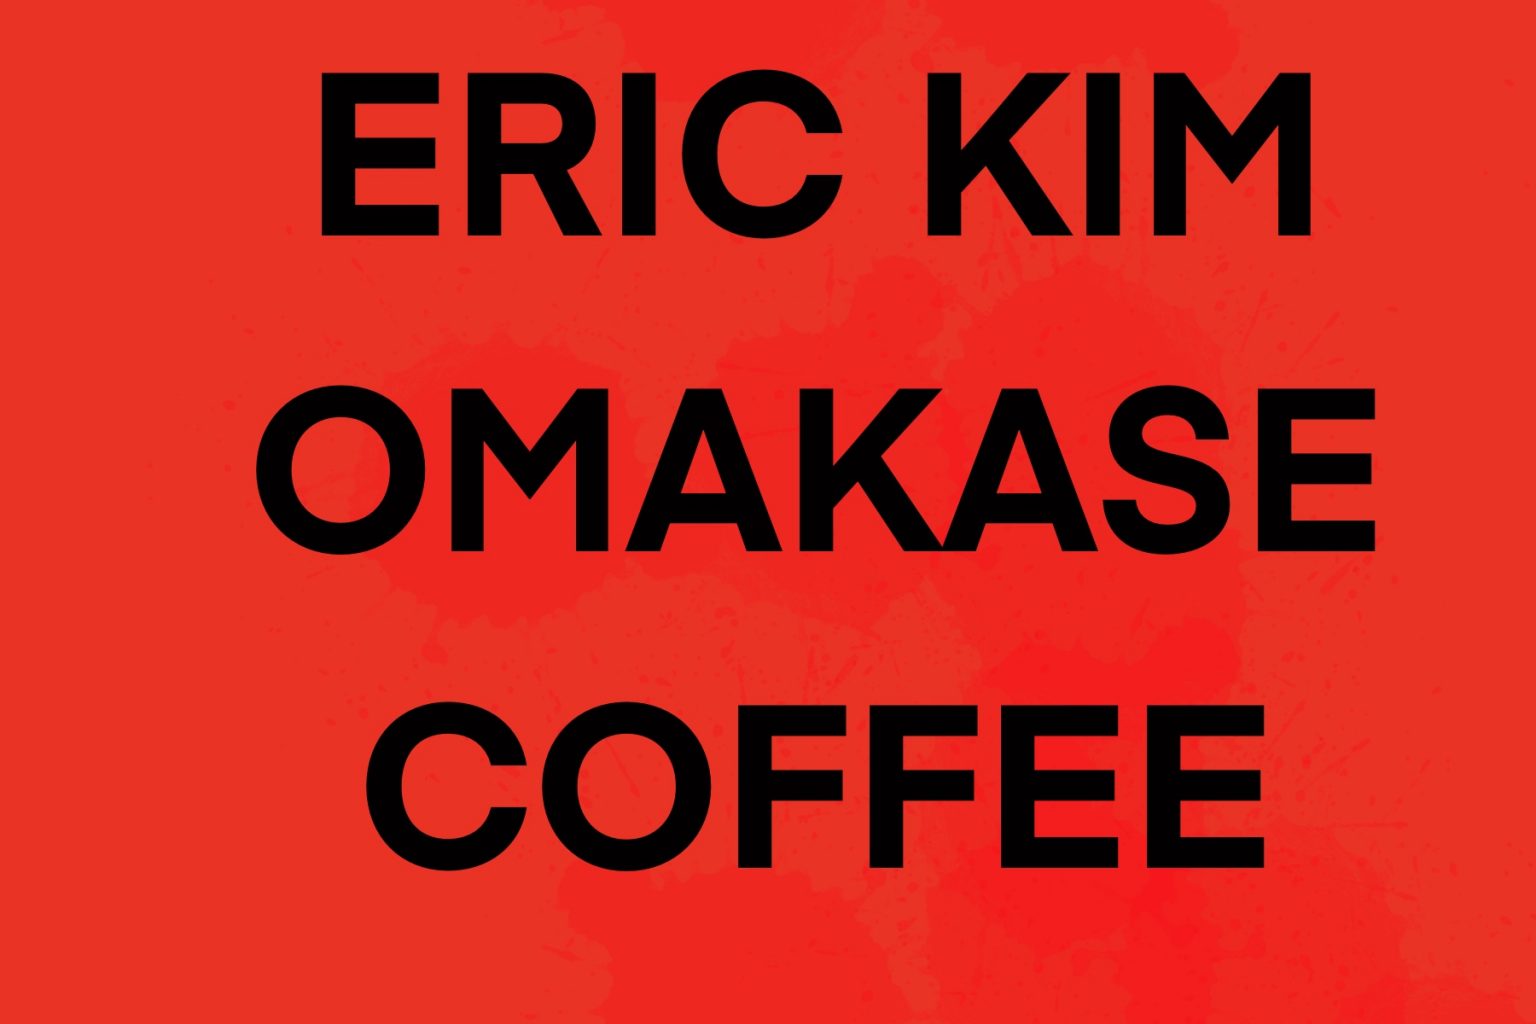 ERIC KIM OMAKASE COFFEE